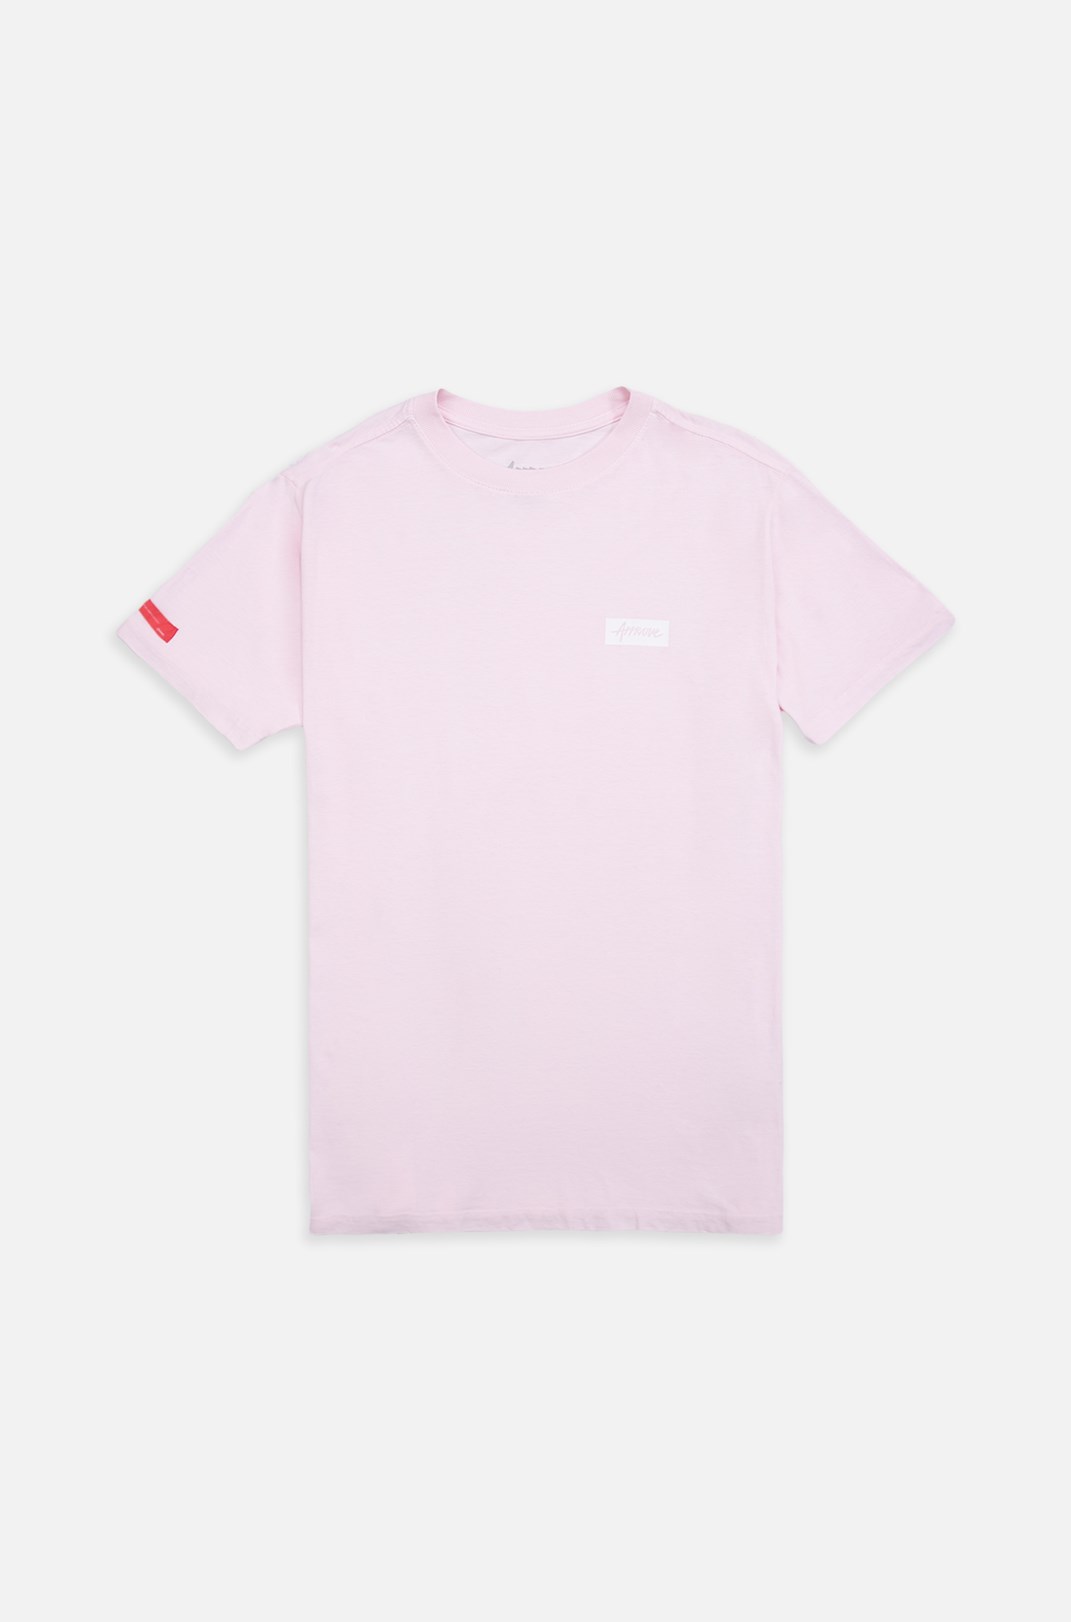 Camiseta Tradicional Approve New Classic Rosa e Branca 